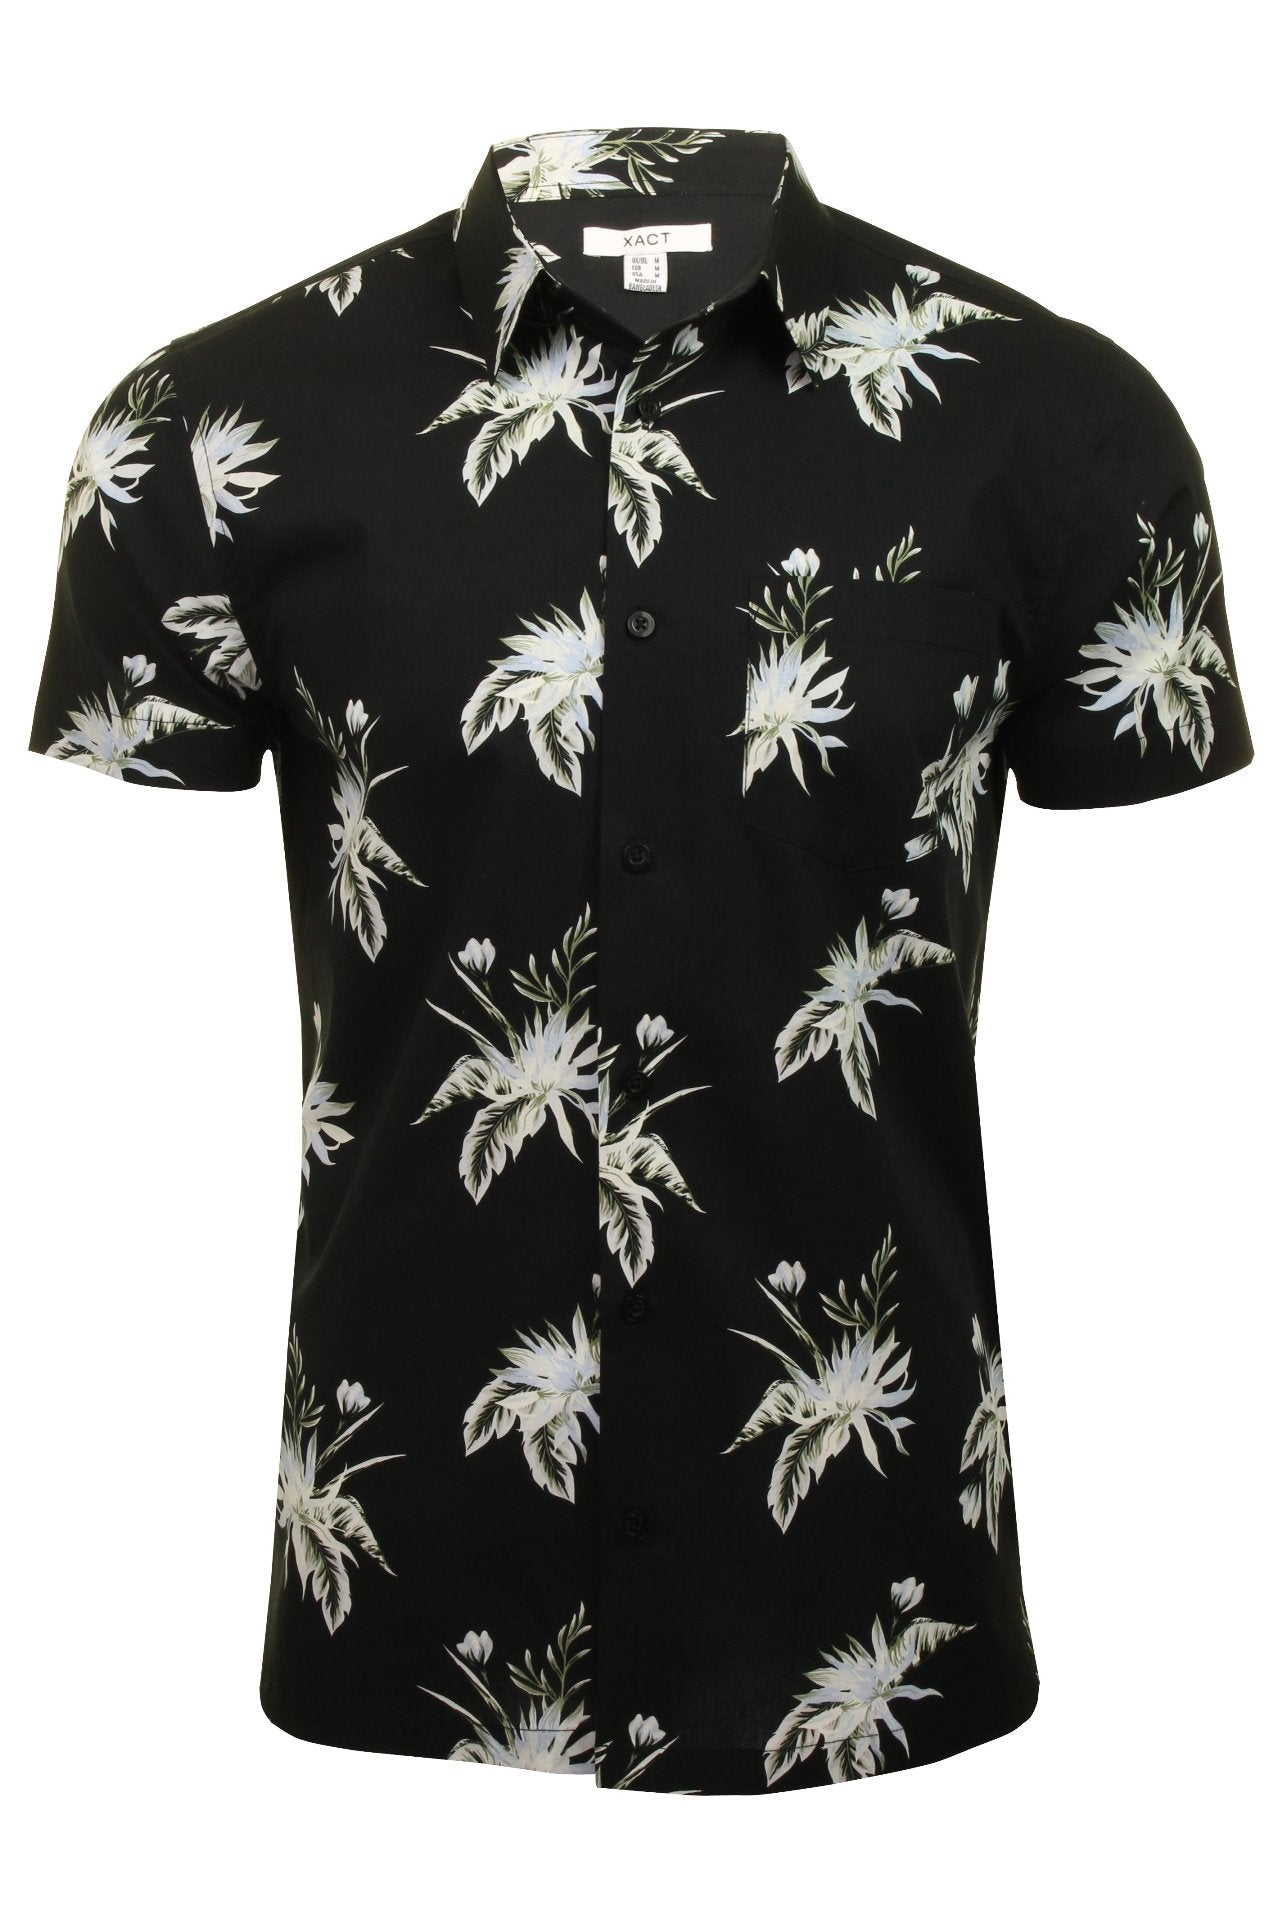 Xact Hawaiian Floral Shirt - Short Sleeved-Main Image